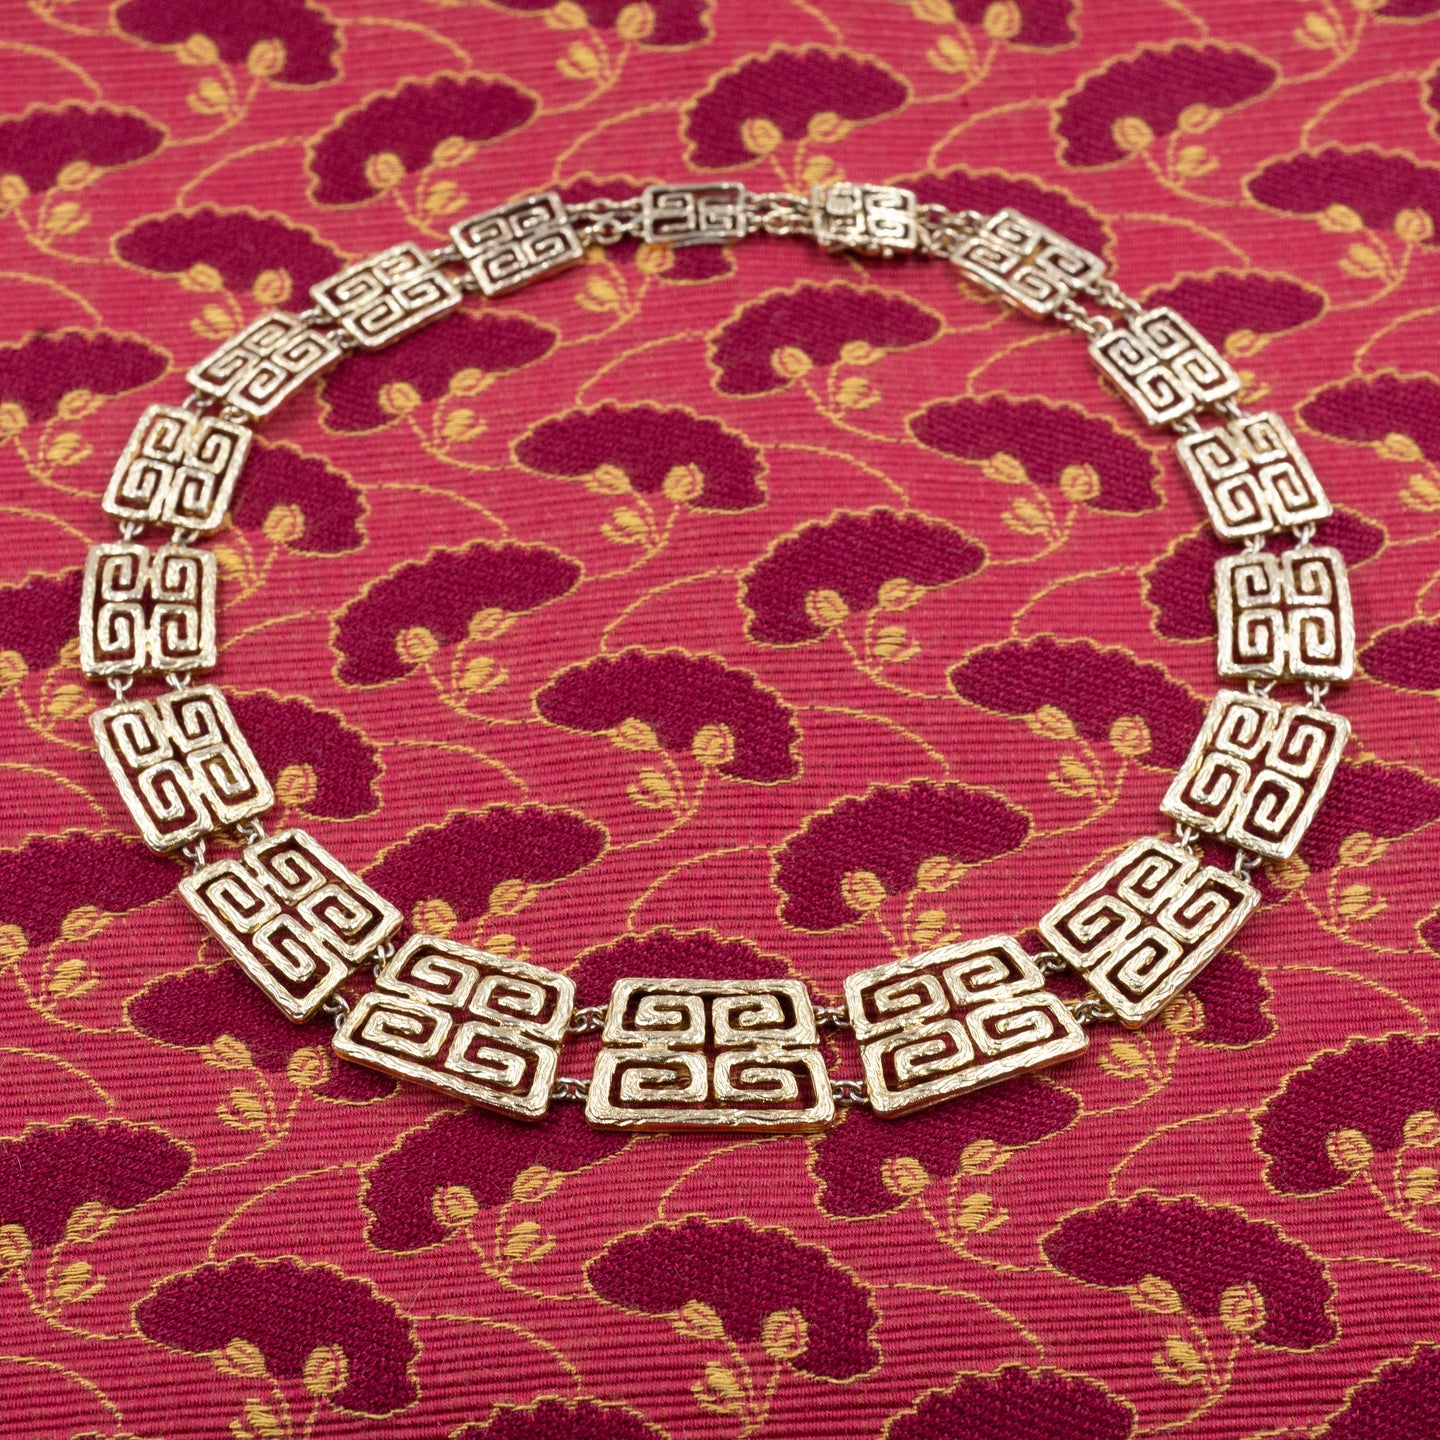 Greek Key Collar Necklace c1970